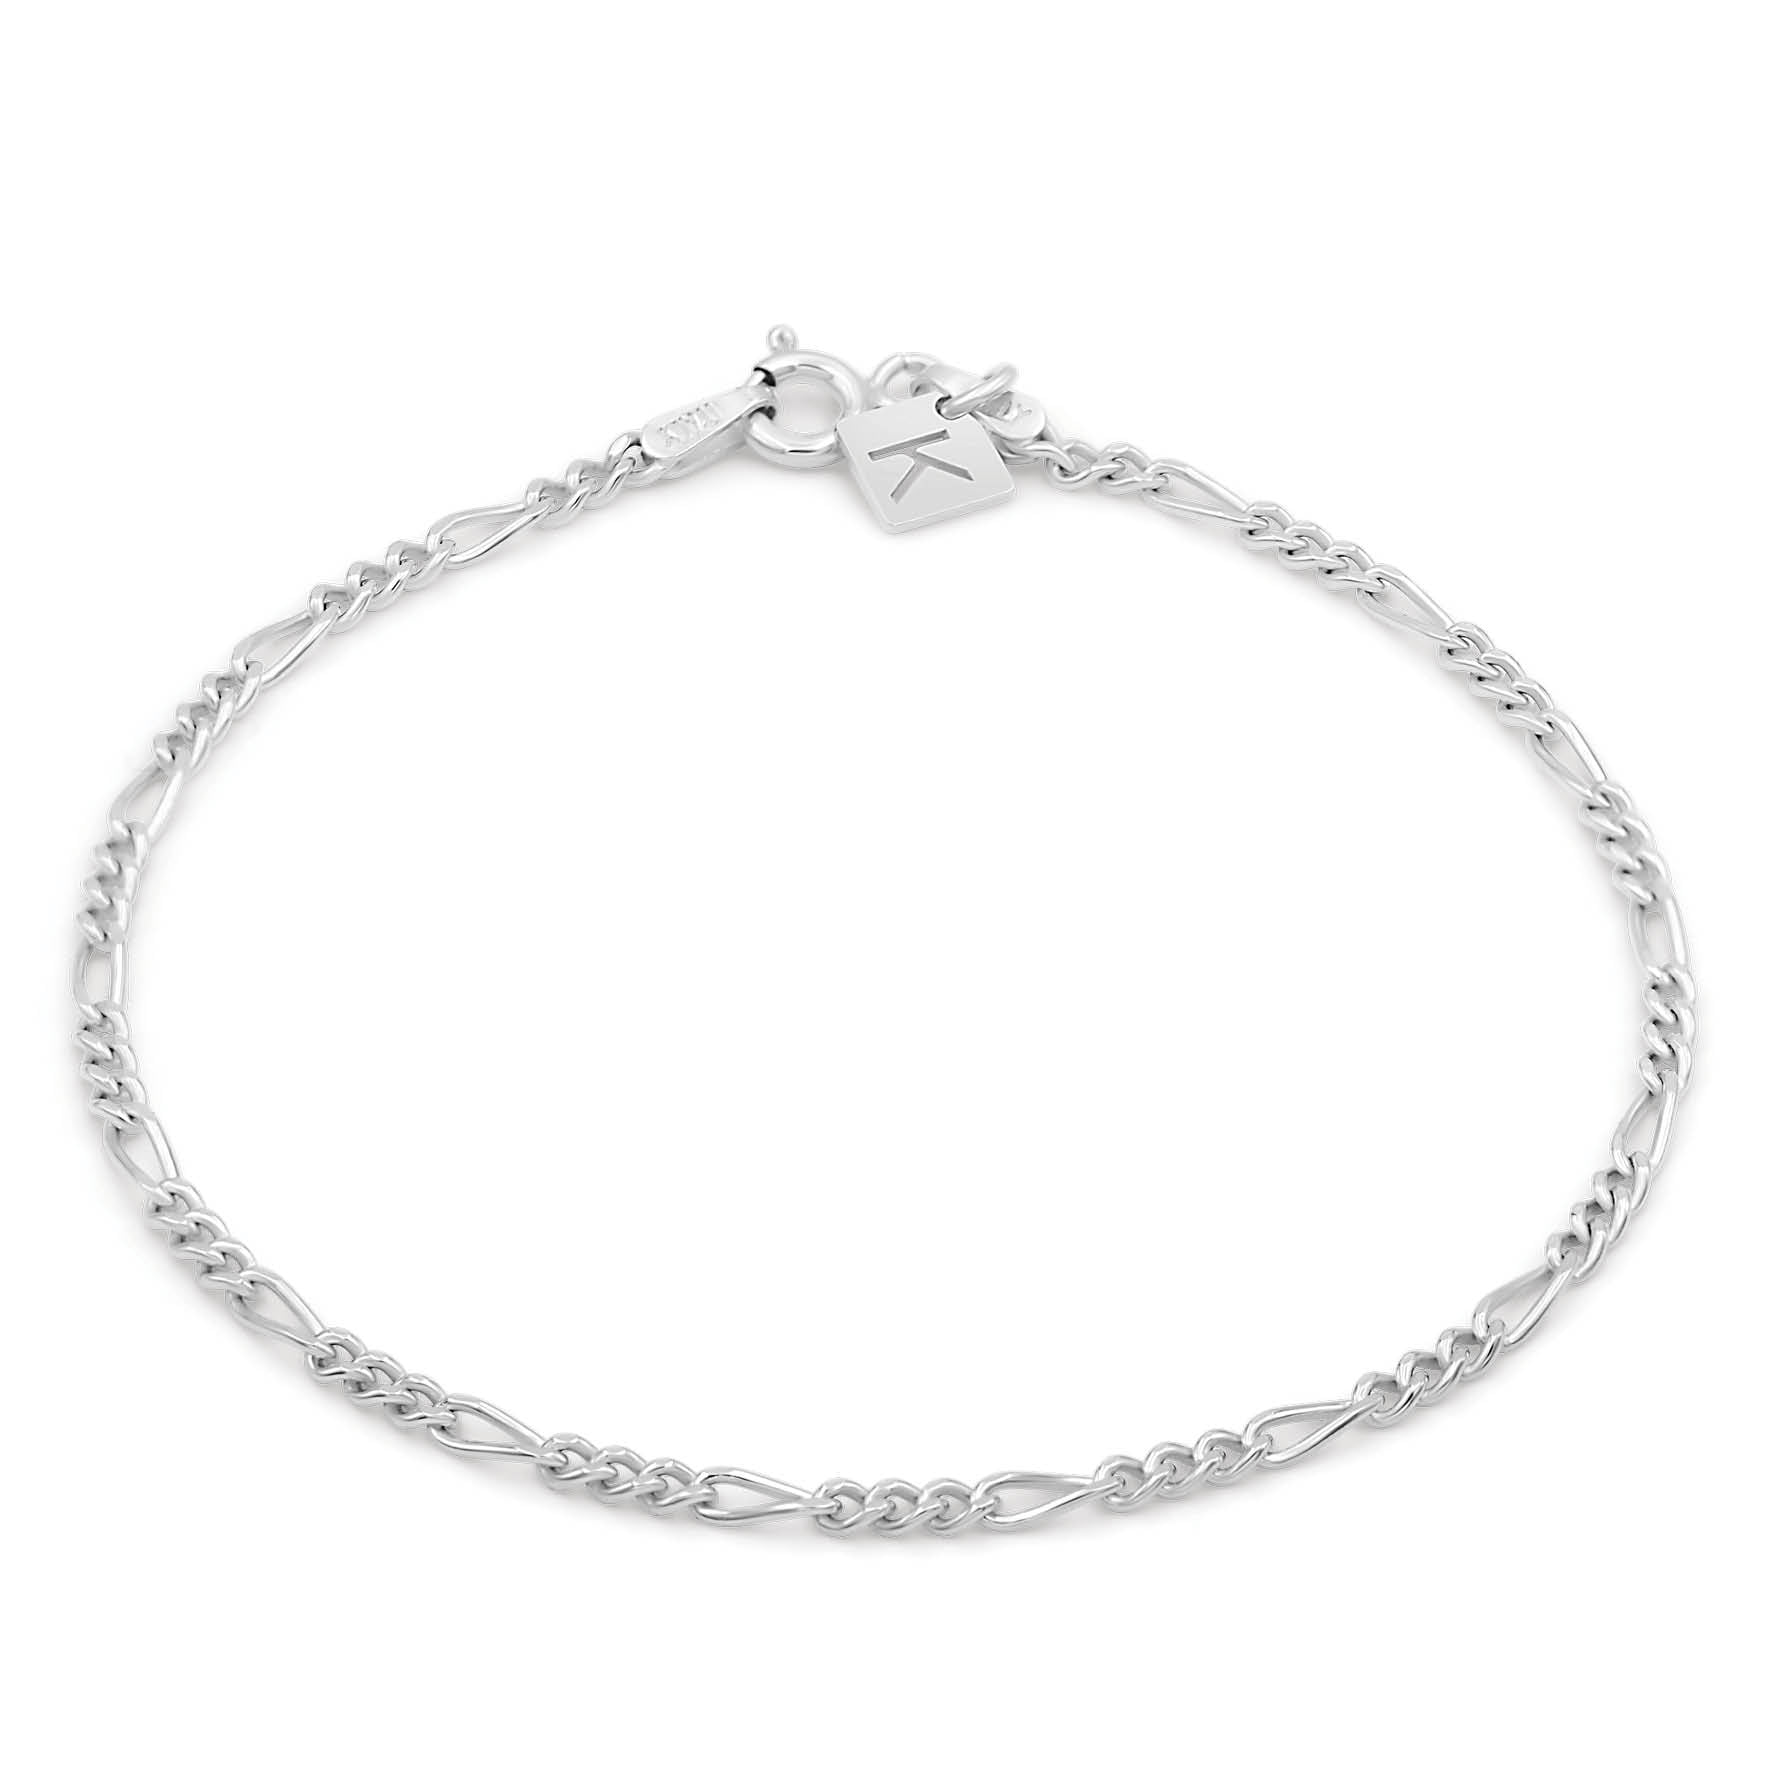 1mm silver 925 Italian diamond cut ball bead link chain necklace bracelet anklet 